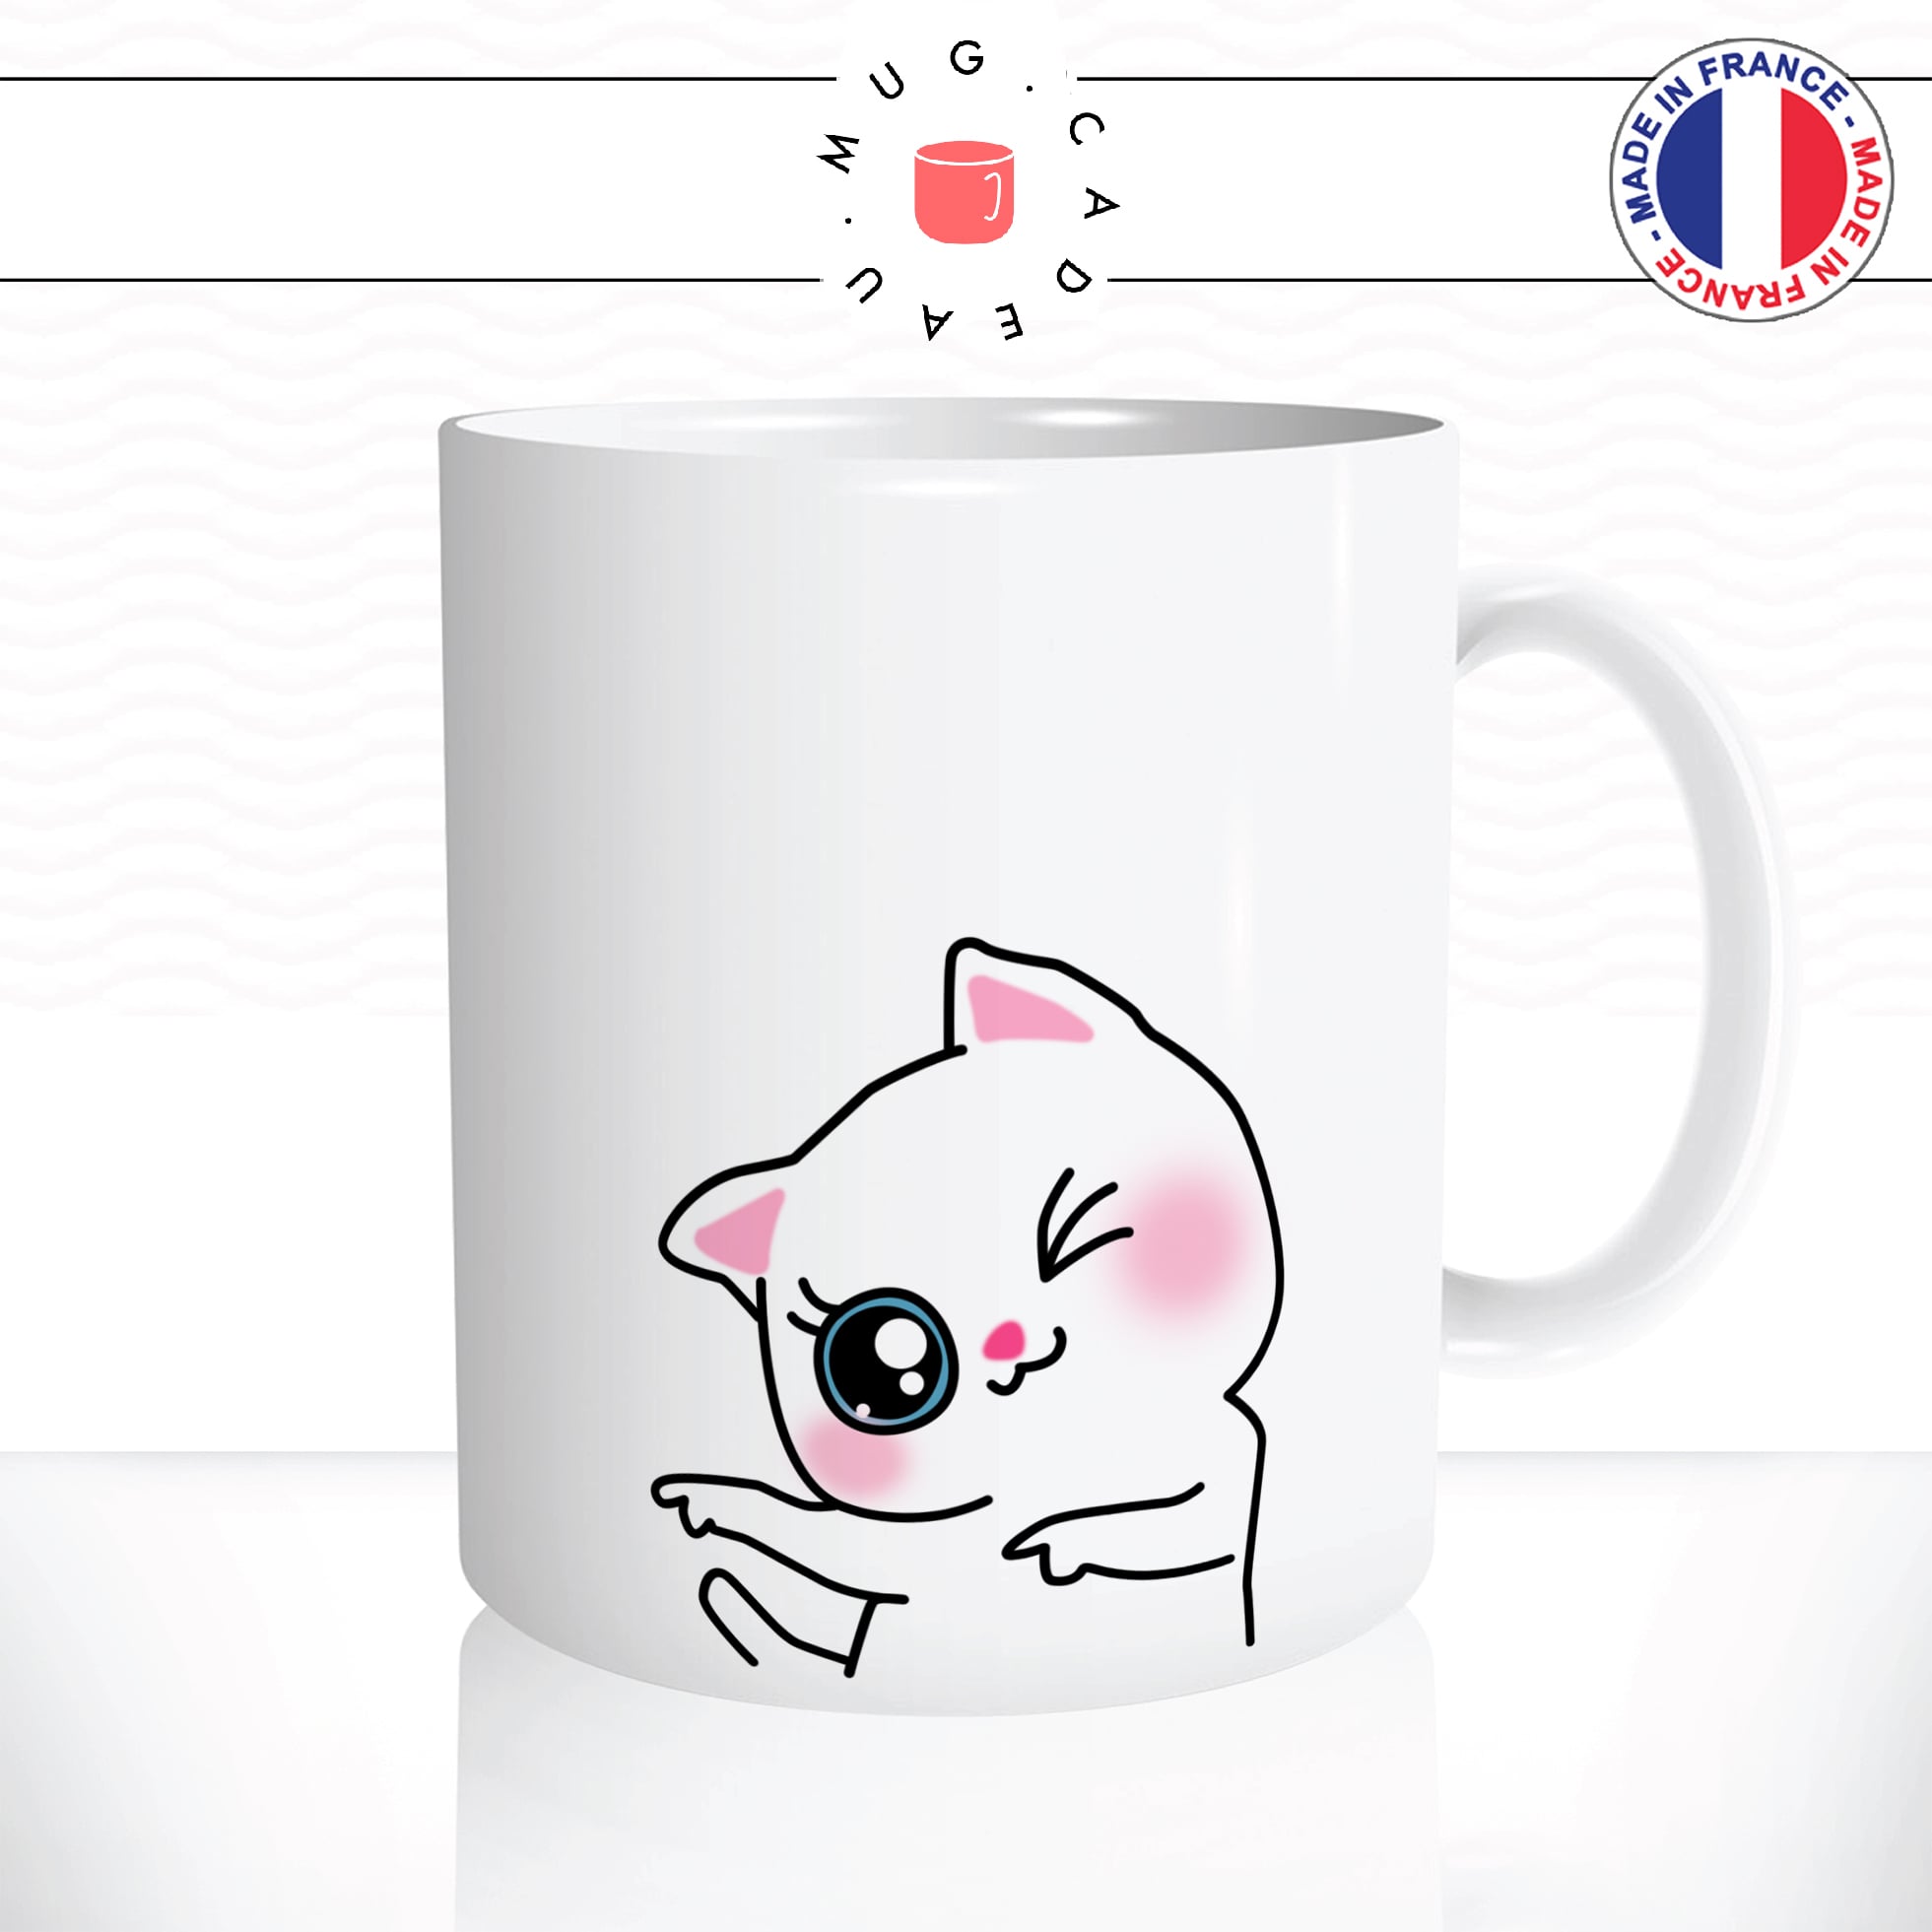 mug-tasse-chat-chaton-clin-doeil-kawaii-blanc-salut-miaou-mignon-dessin-animal-cafe-thé-idée-cadeau-original